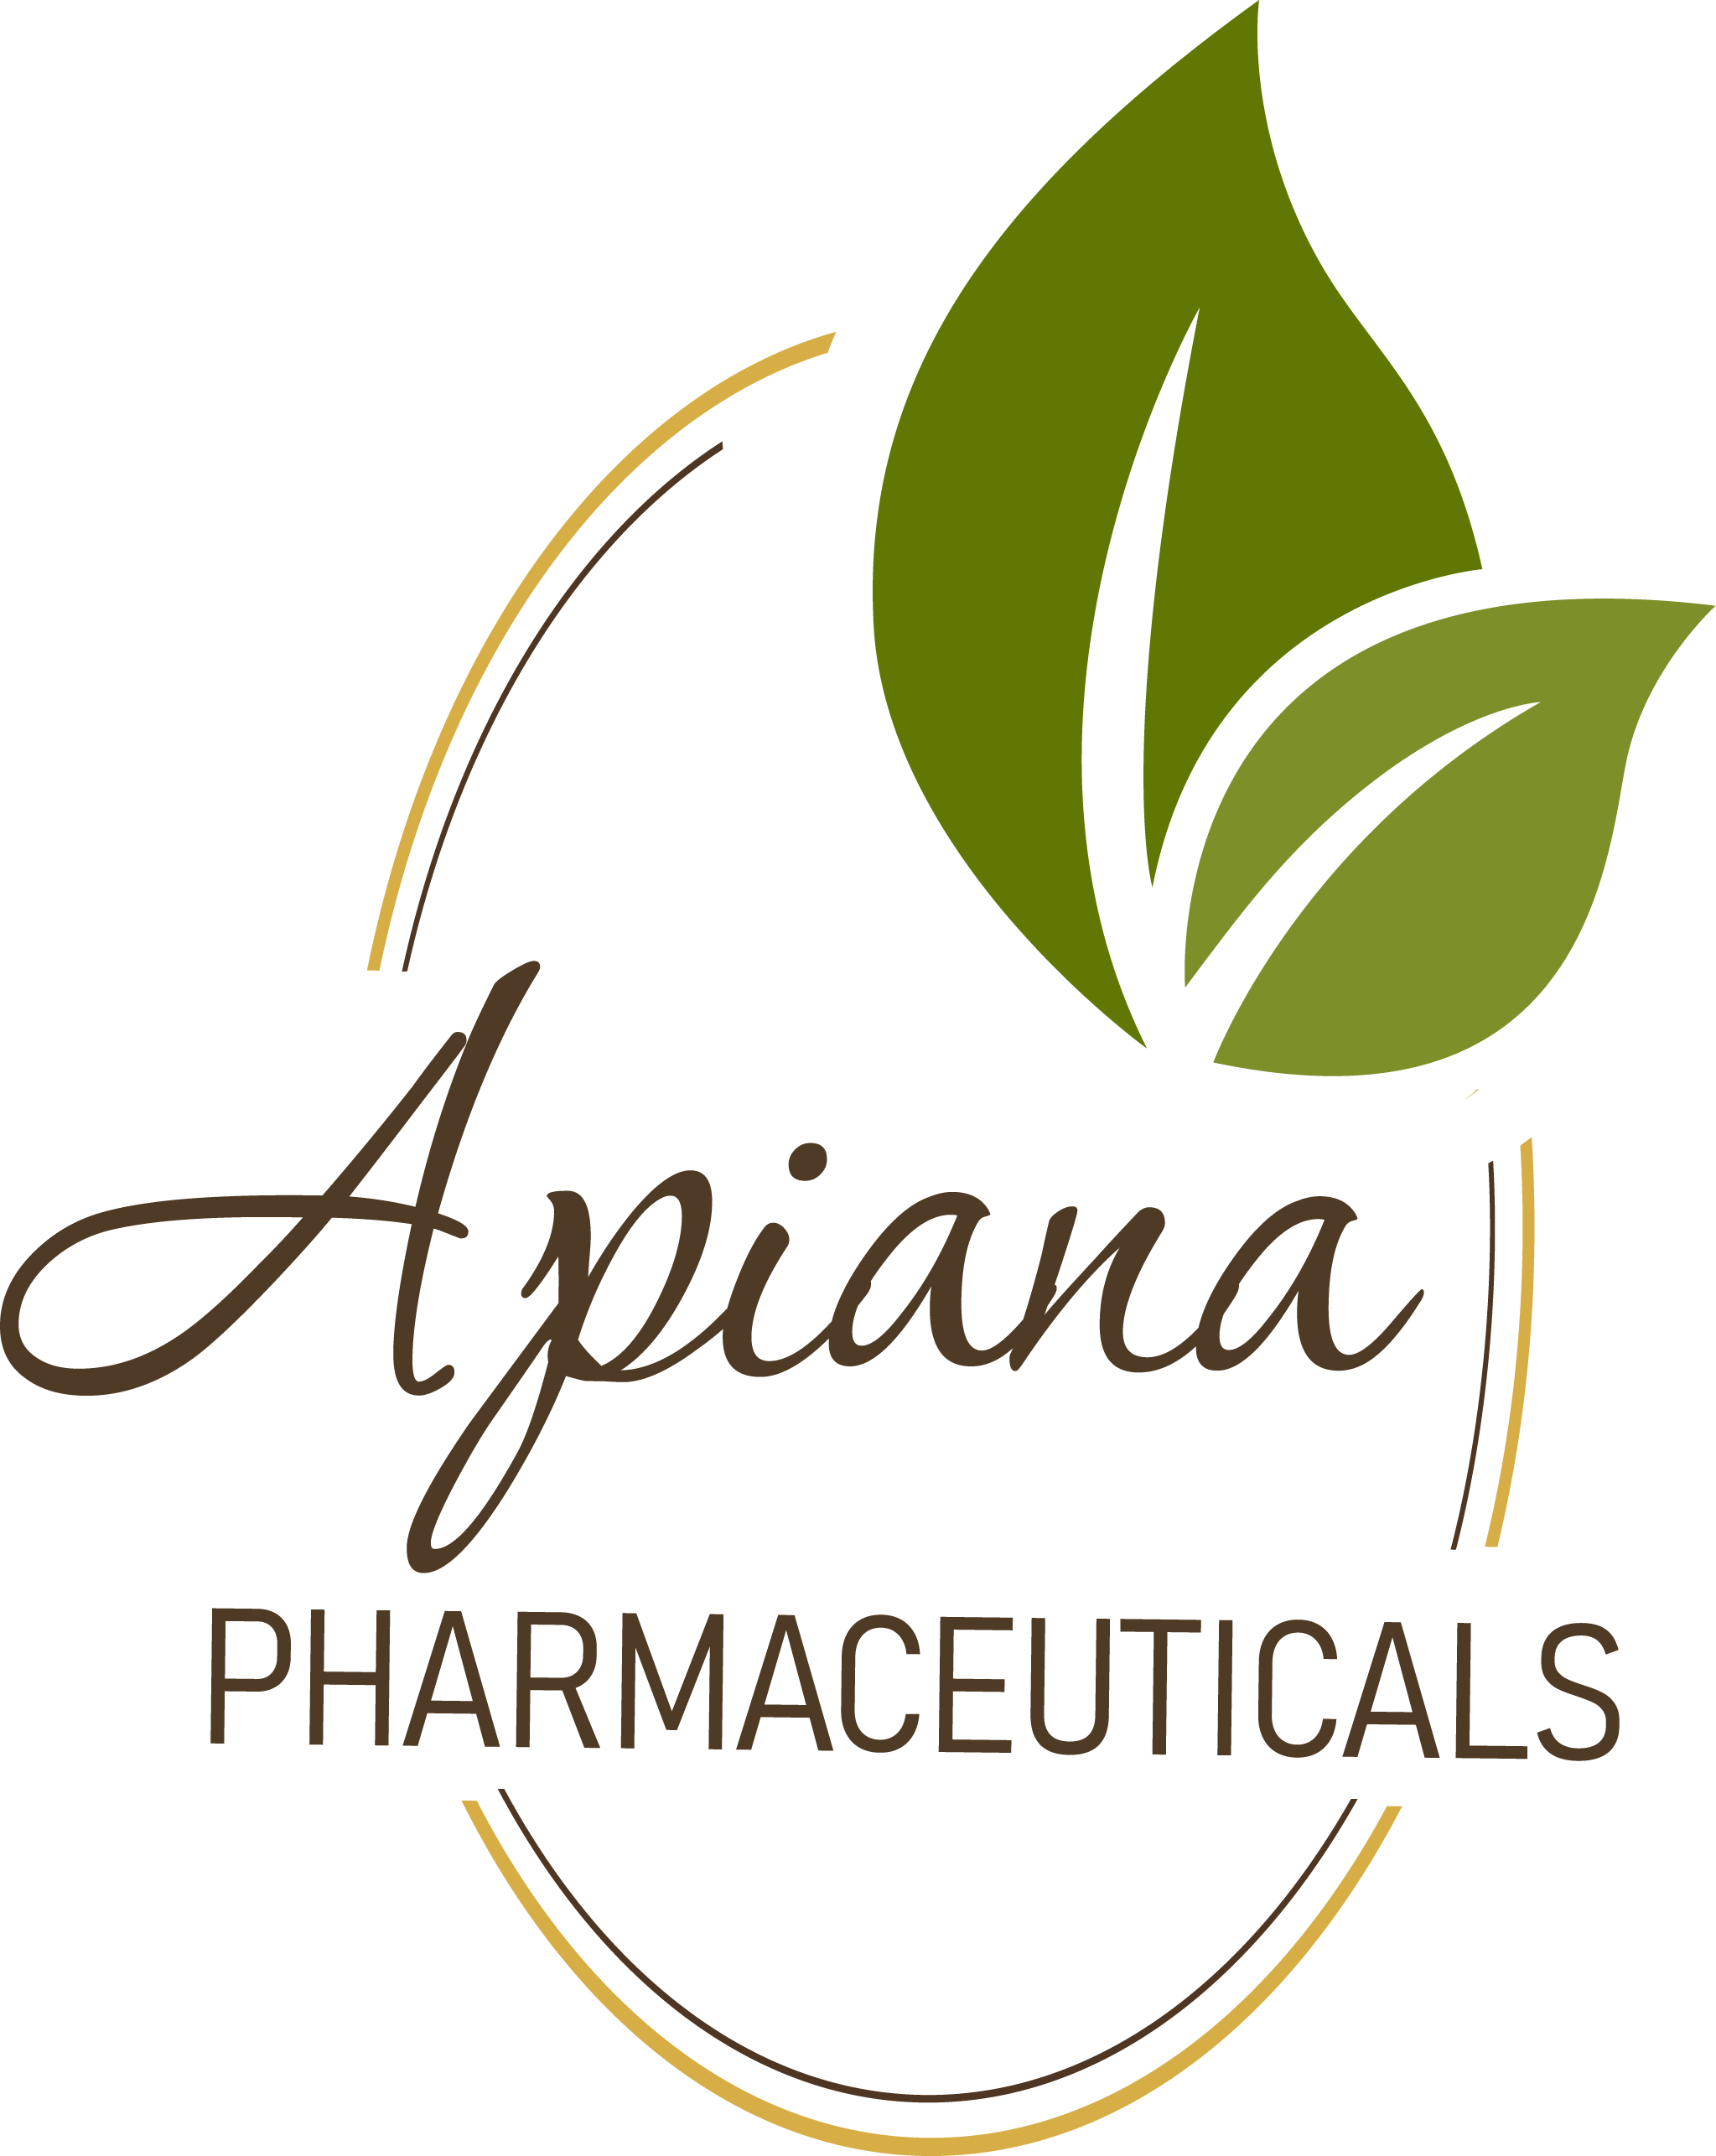 Apiana Pharmaceuticals